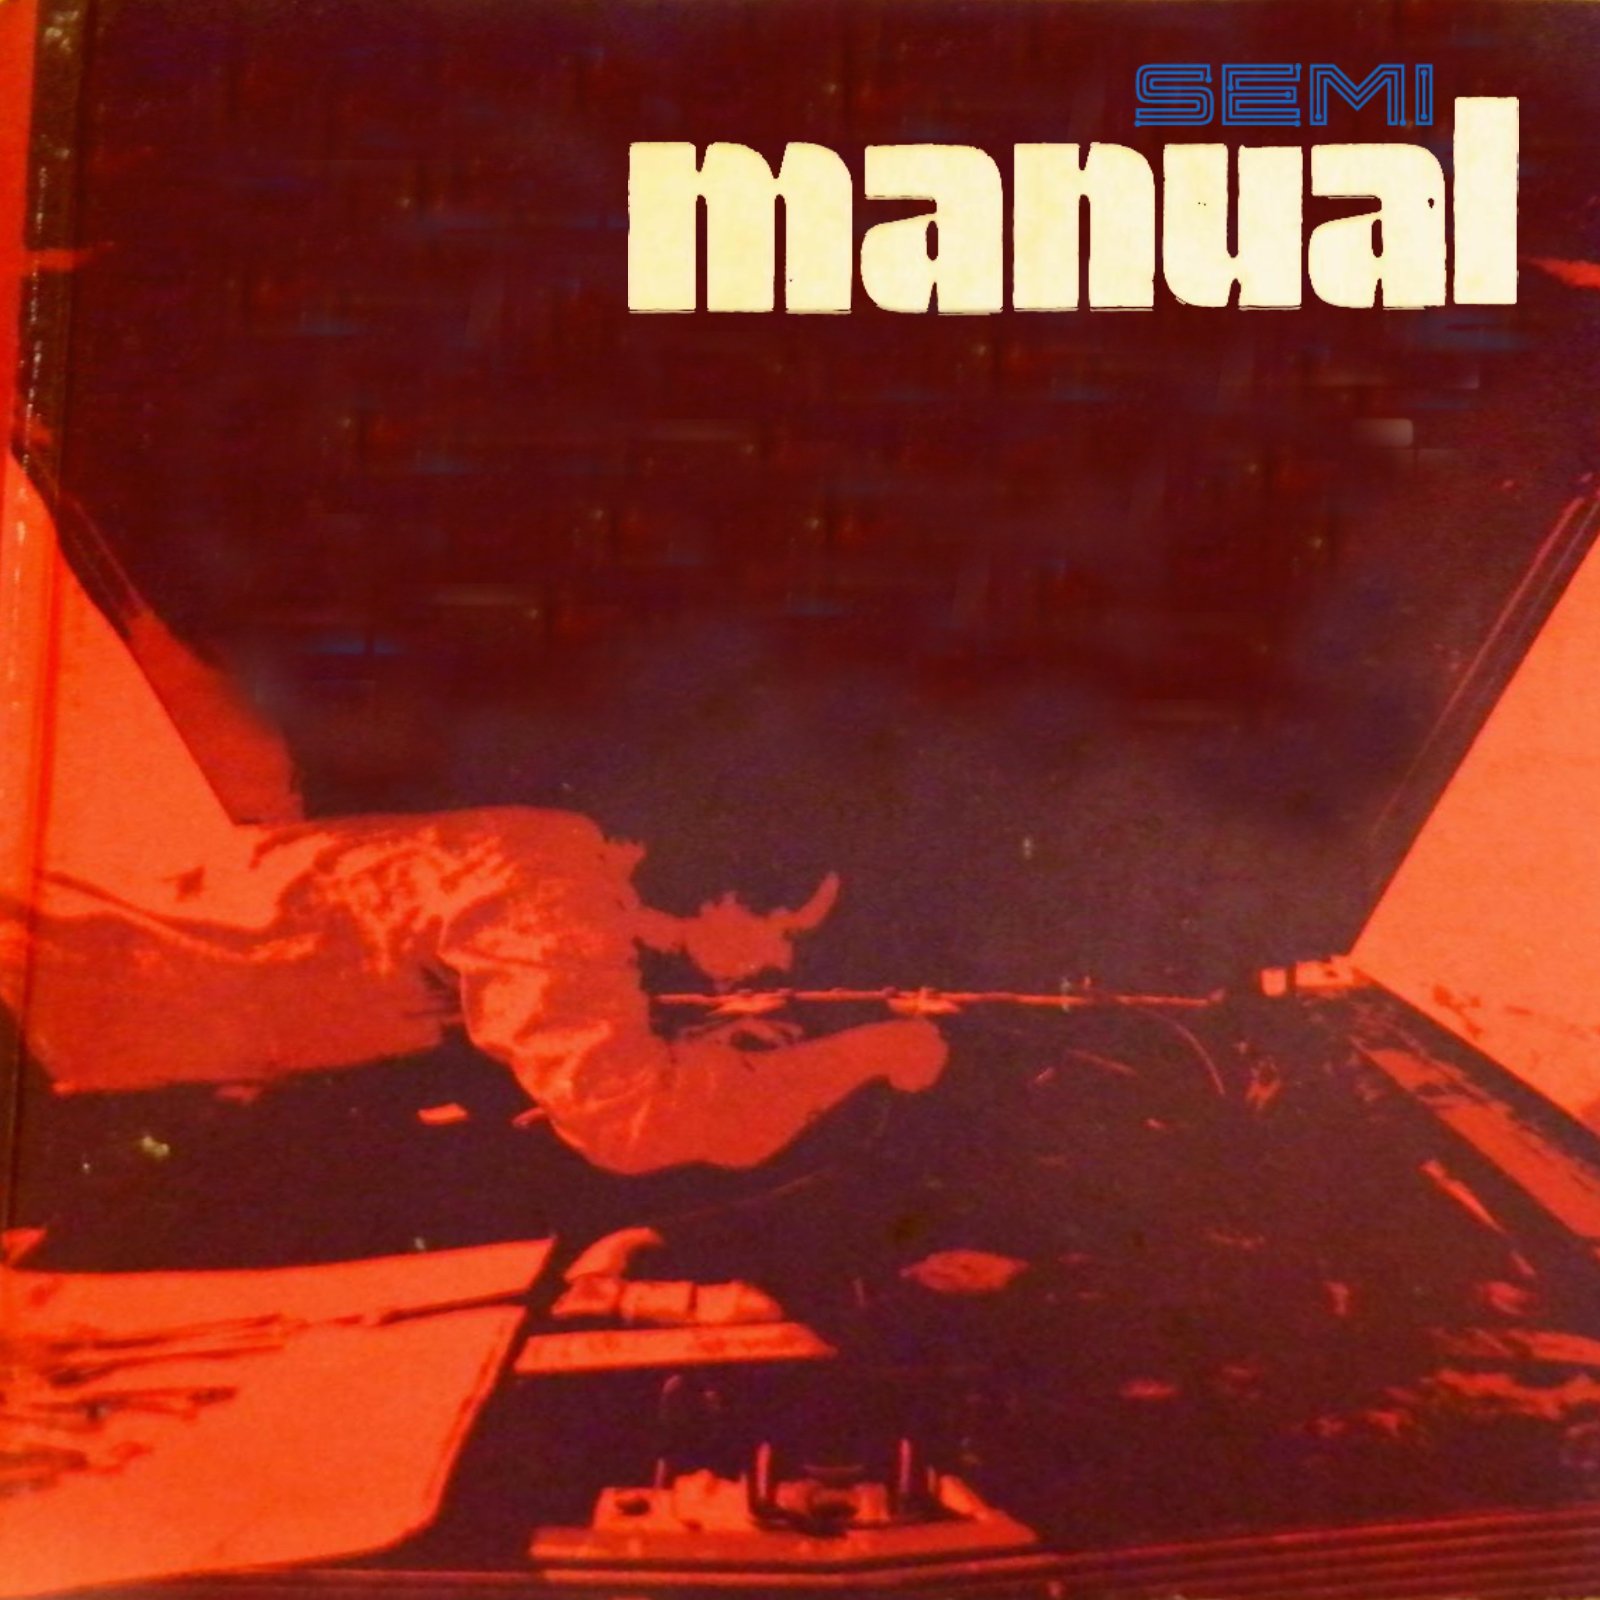  New 10 track Fomular release:  Semi Manual  